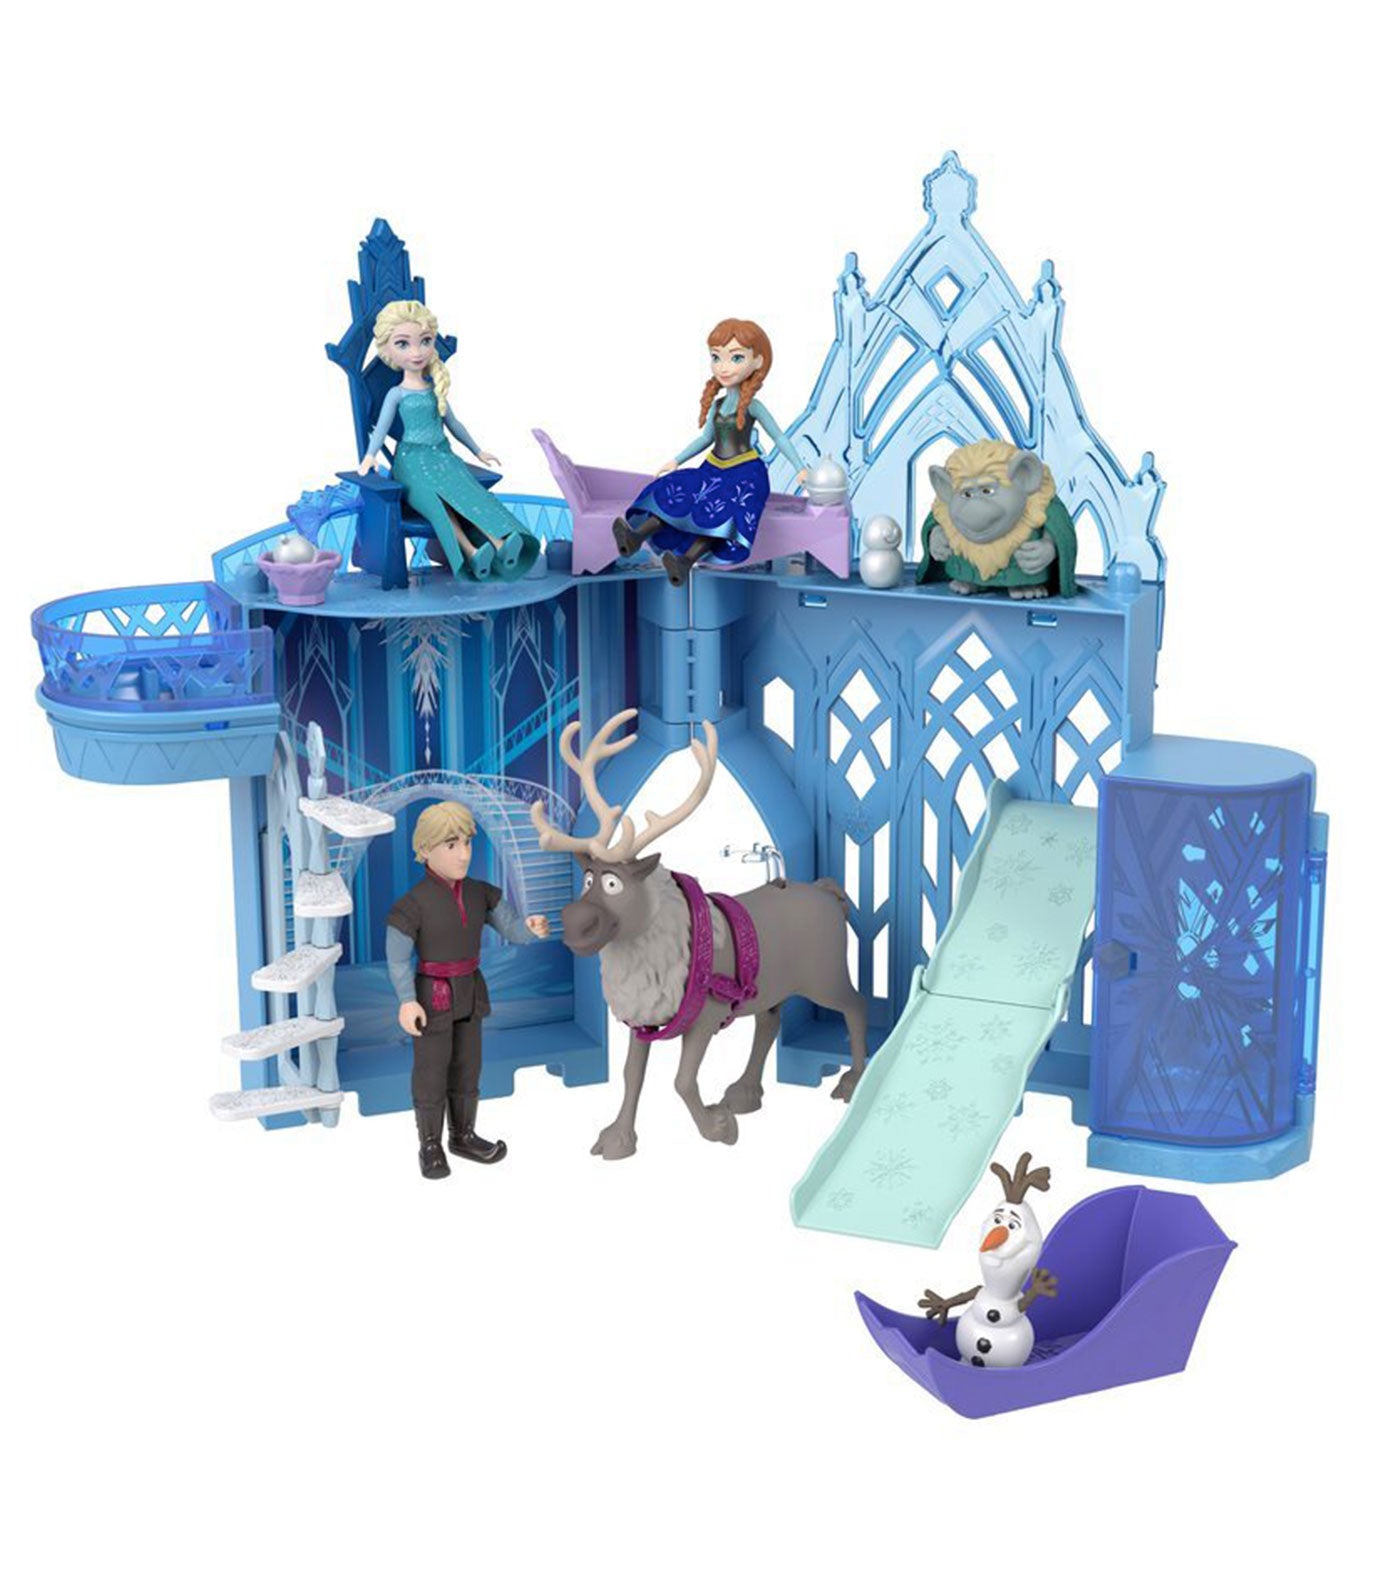 Frozen Elsa's Ice Palace